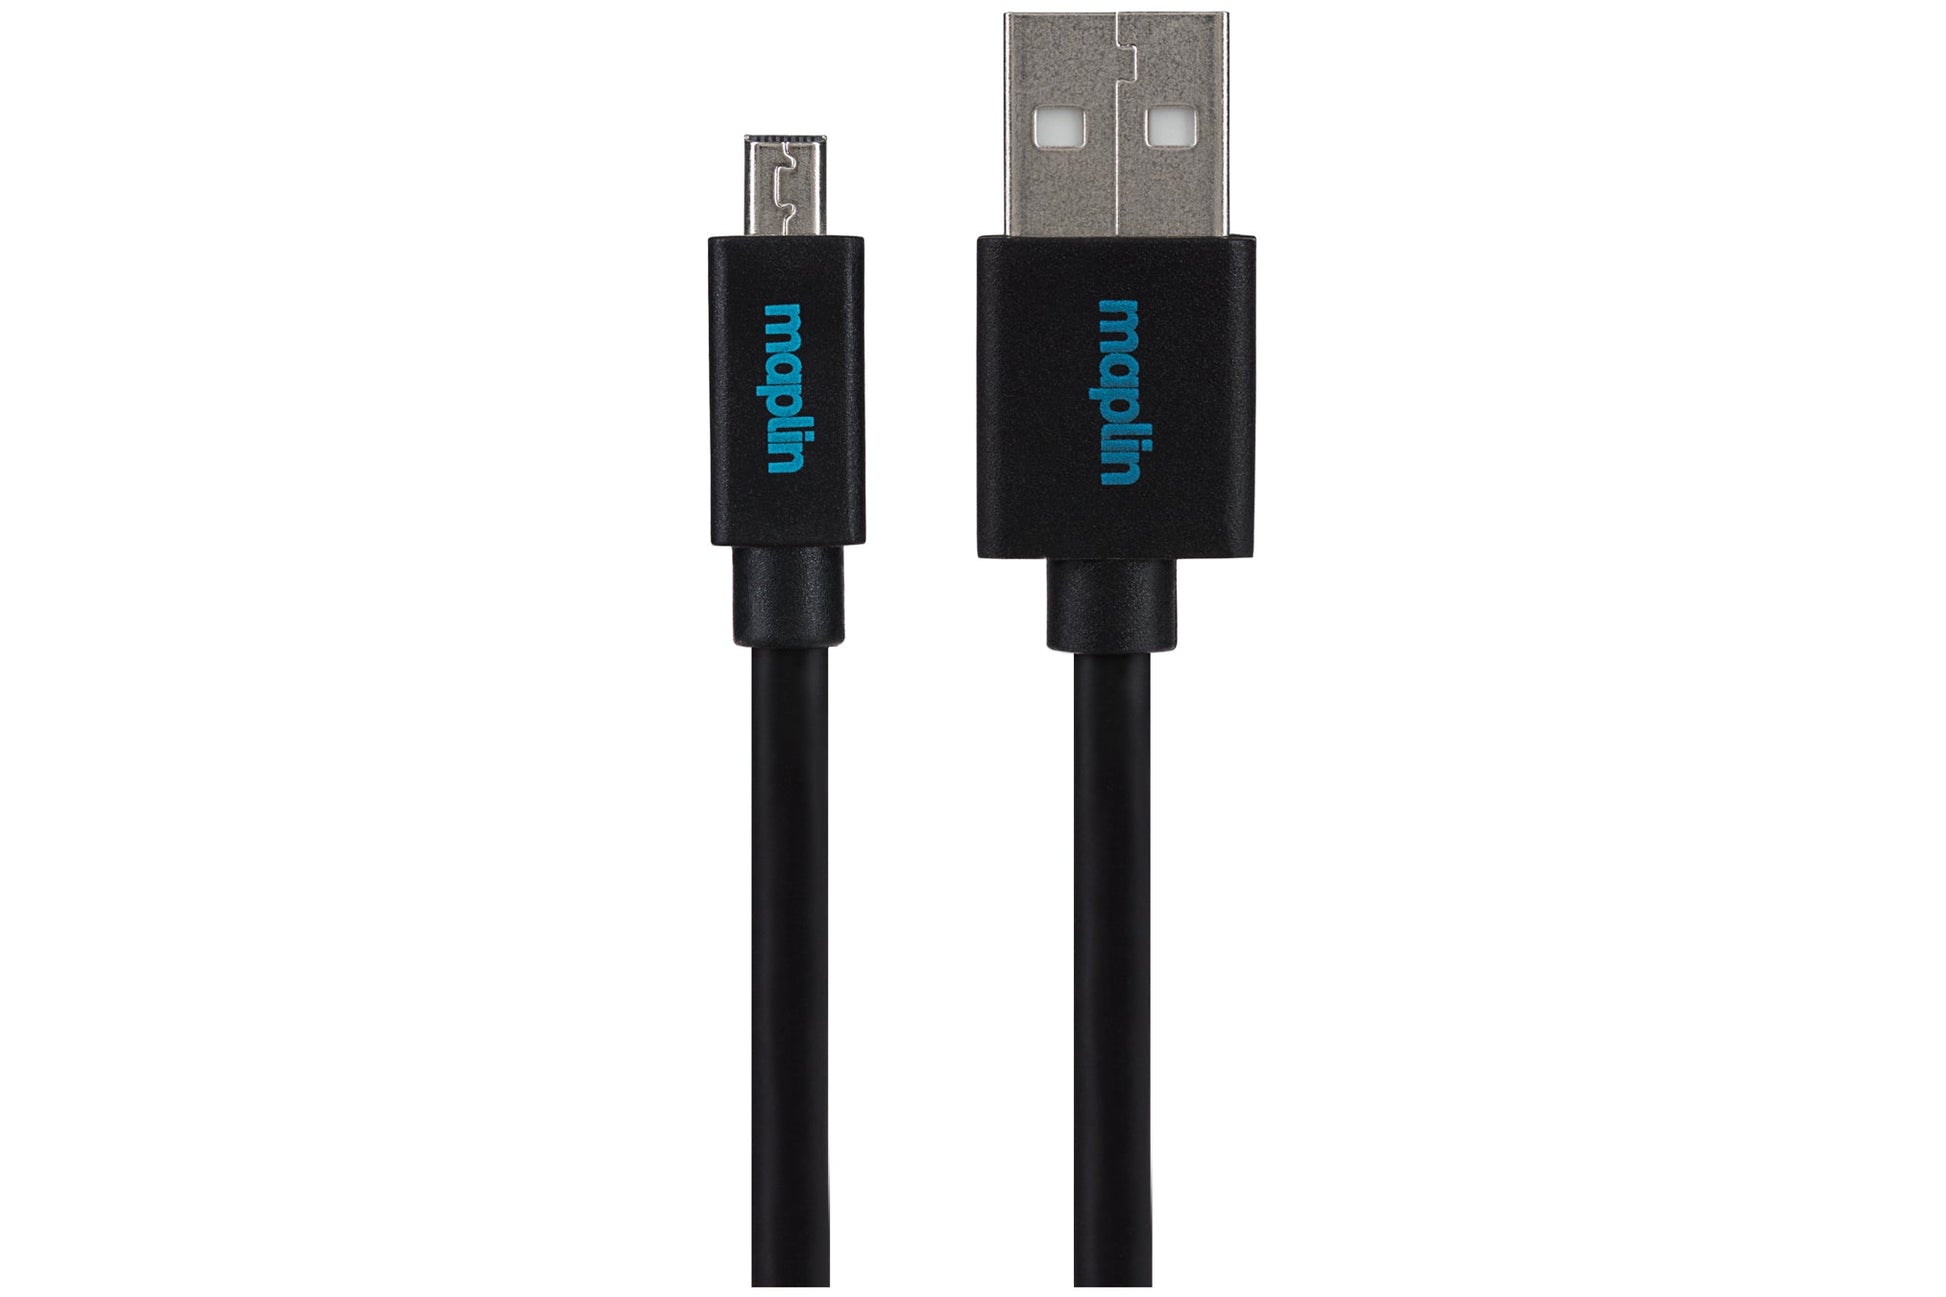 Maplin USB-A to 8-Pin Mini USB Cable for Data & Photo Transfer - Black, 3m - maplin.co.uk